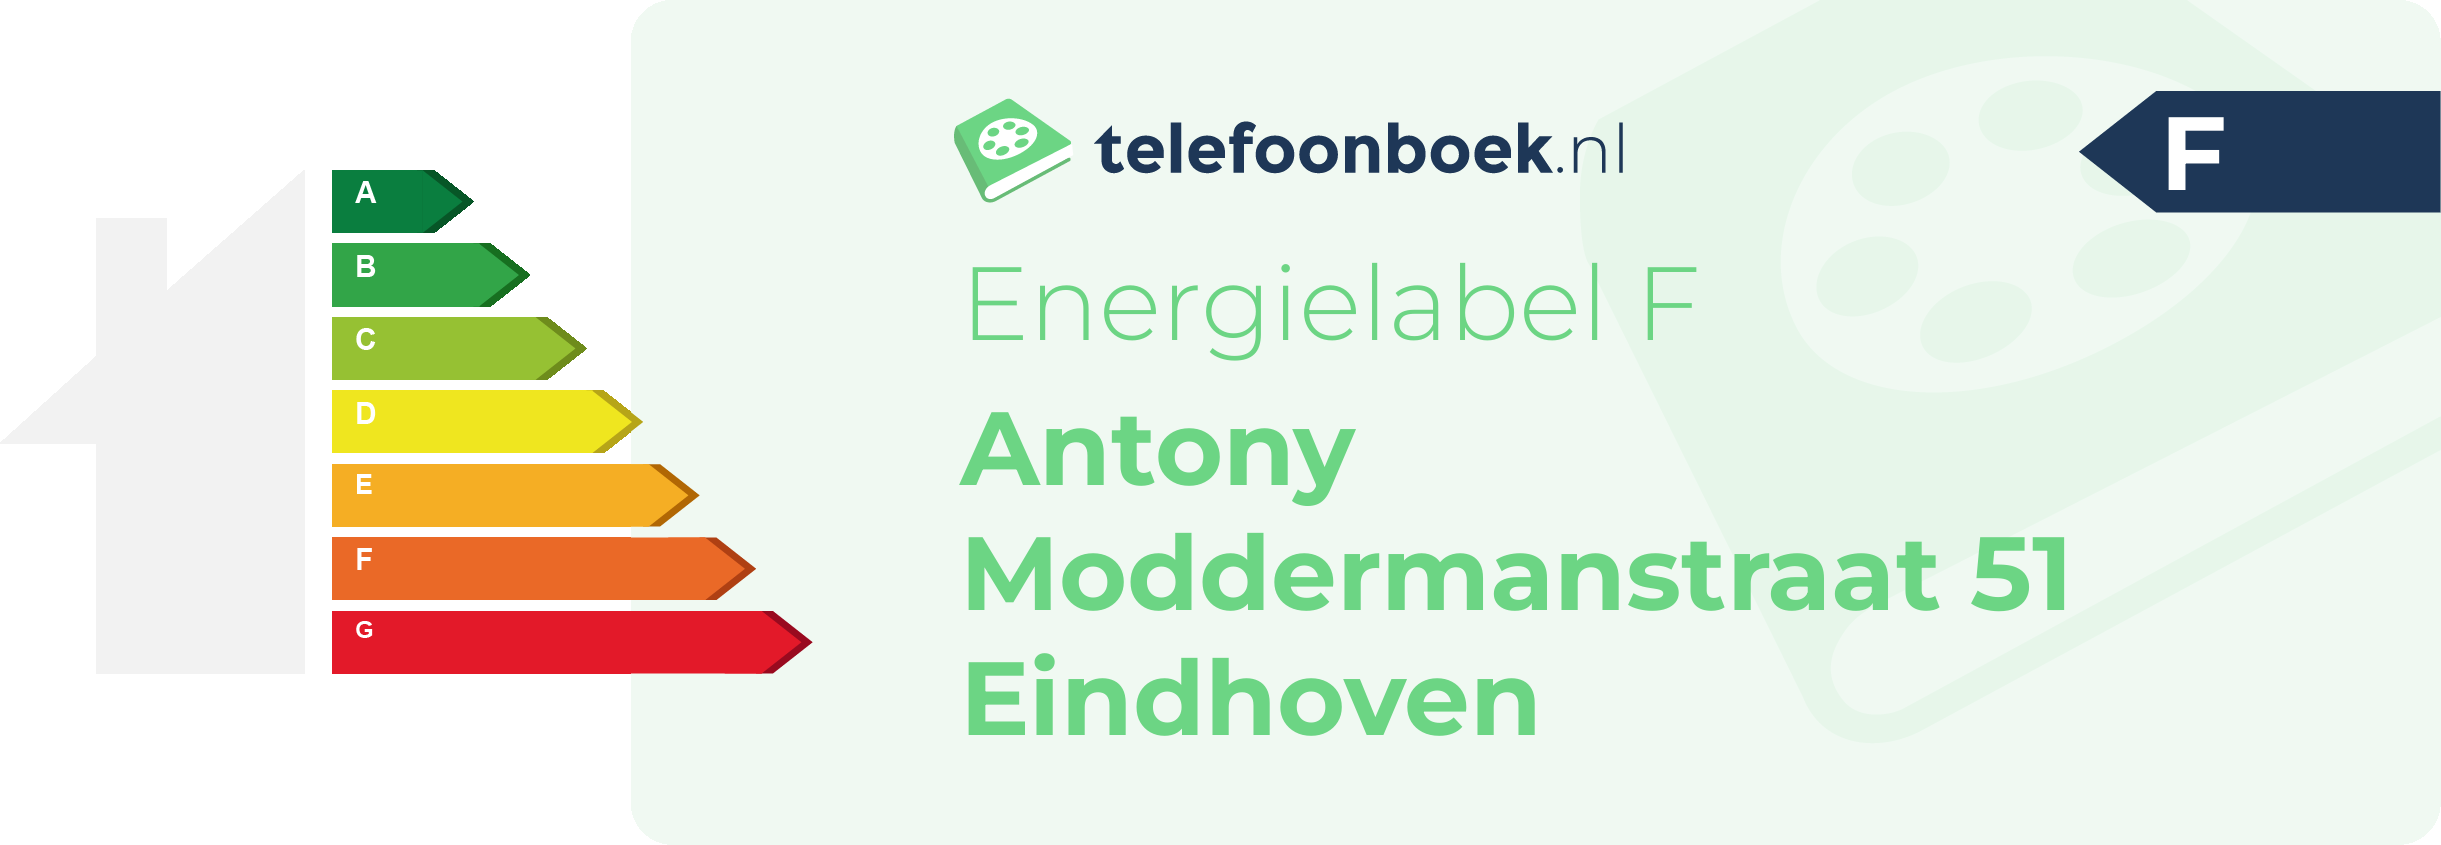 Energielabel Antony Moddermanstraat 51 Eindhoven